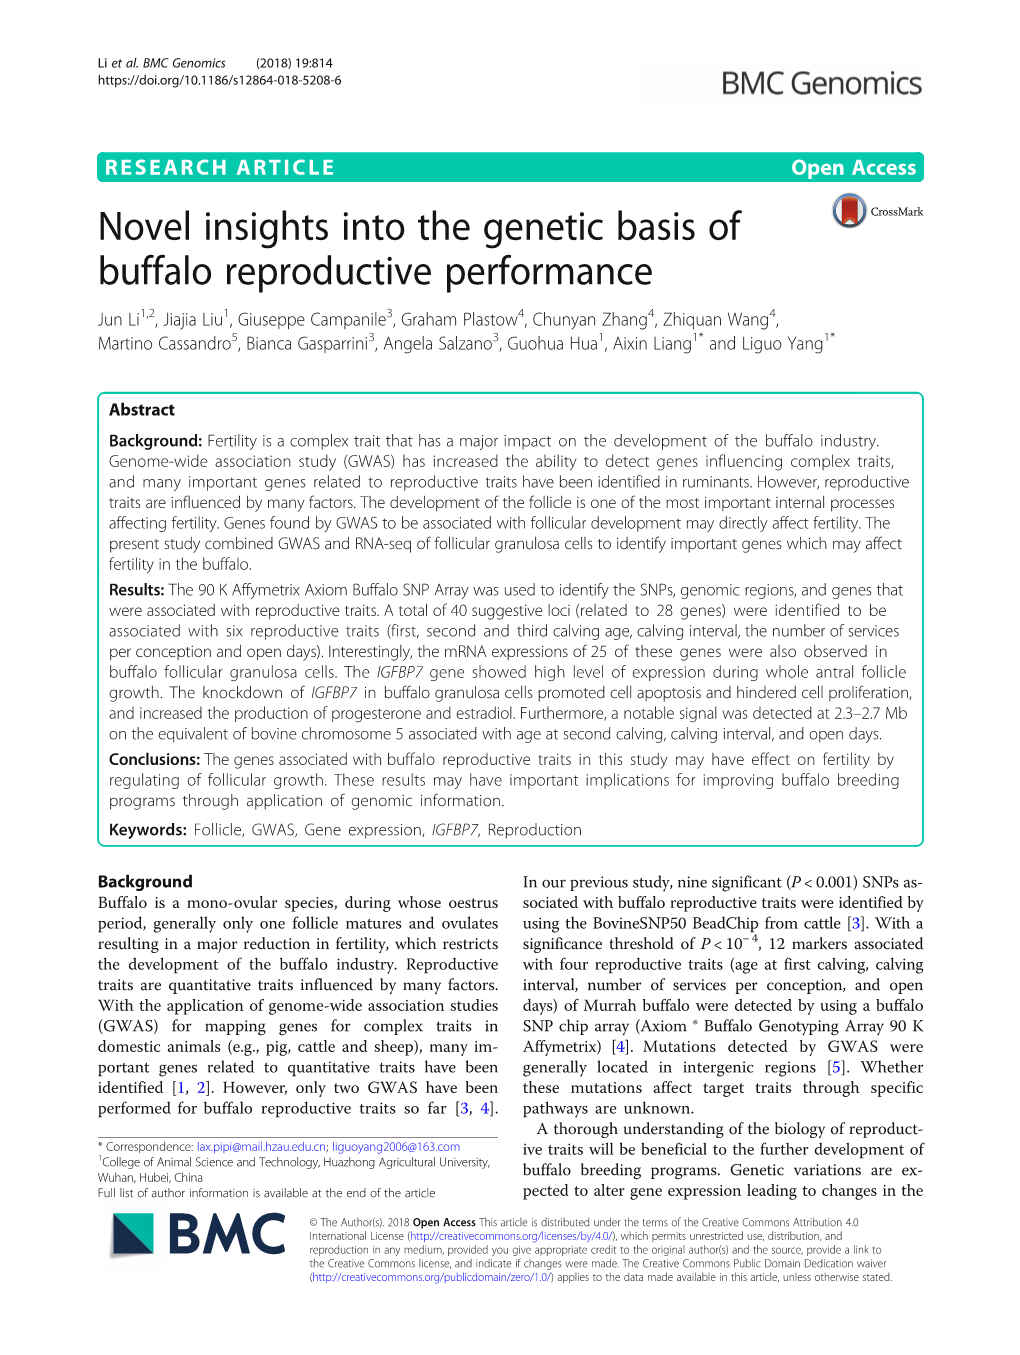 Novel Insights Into the Genetic Basis of Buffalo Reproductive Performance